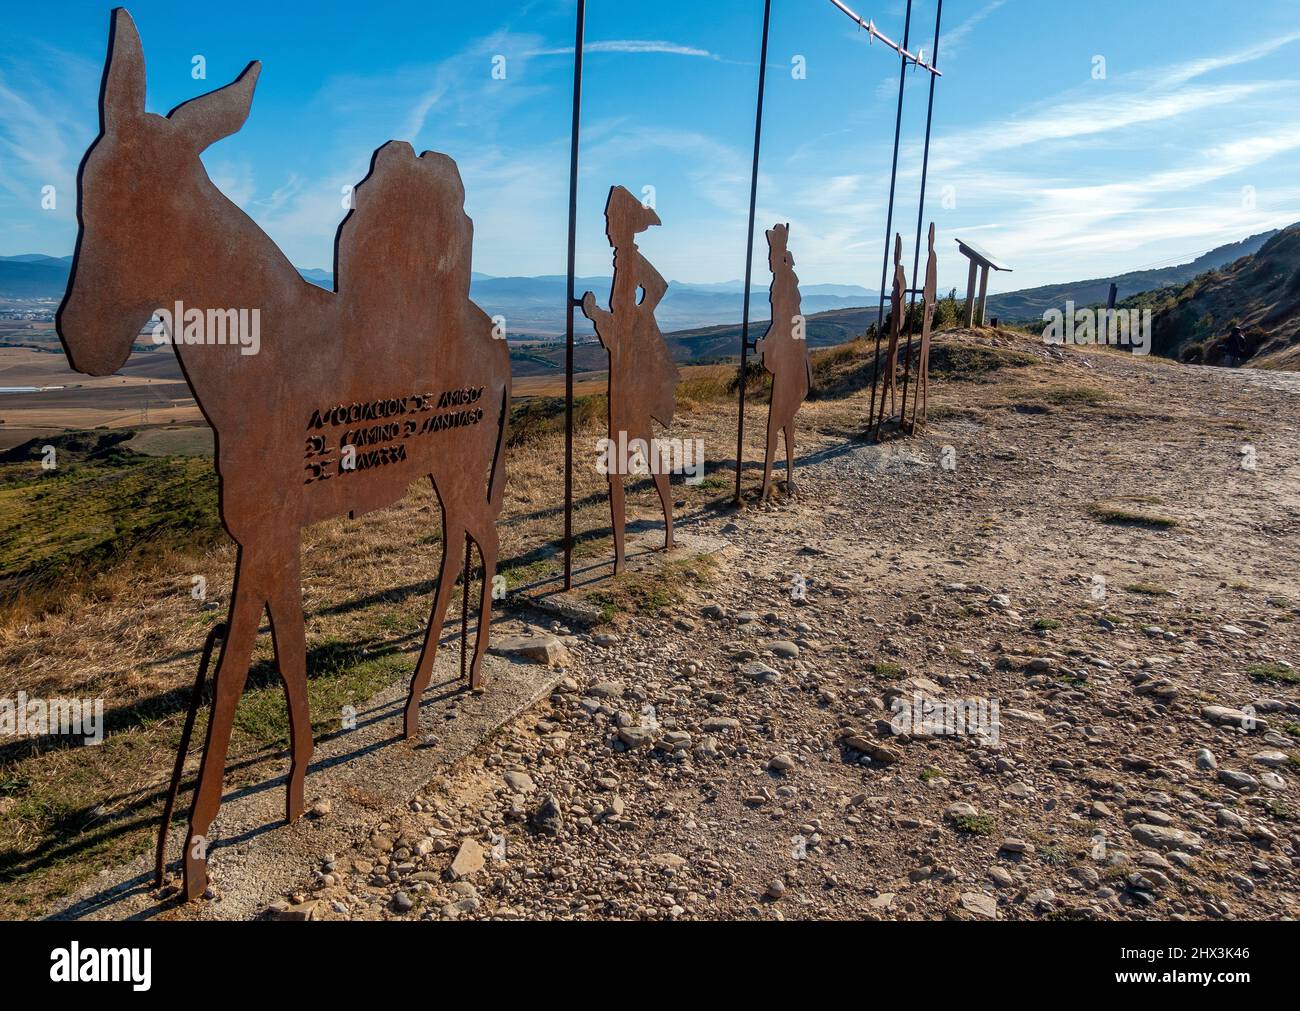 The bronze steel sculpture on the Alto del Perdon (the Mount of Forgiveness) on the Camino de Santiago near Uterga, Pamplona, Spain Stock Photo